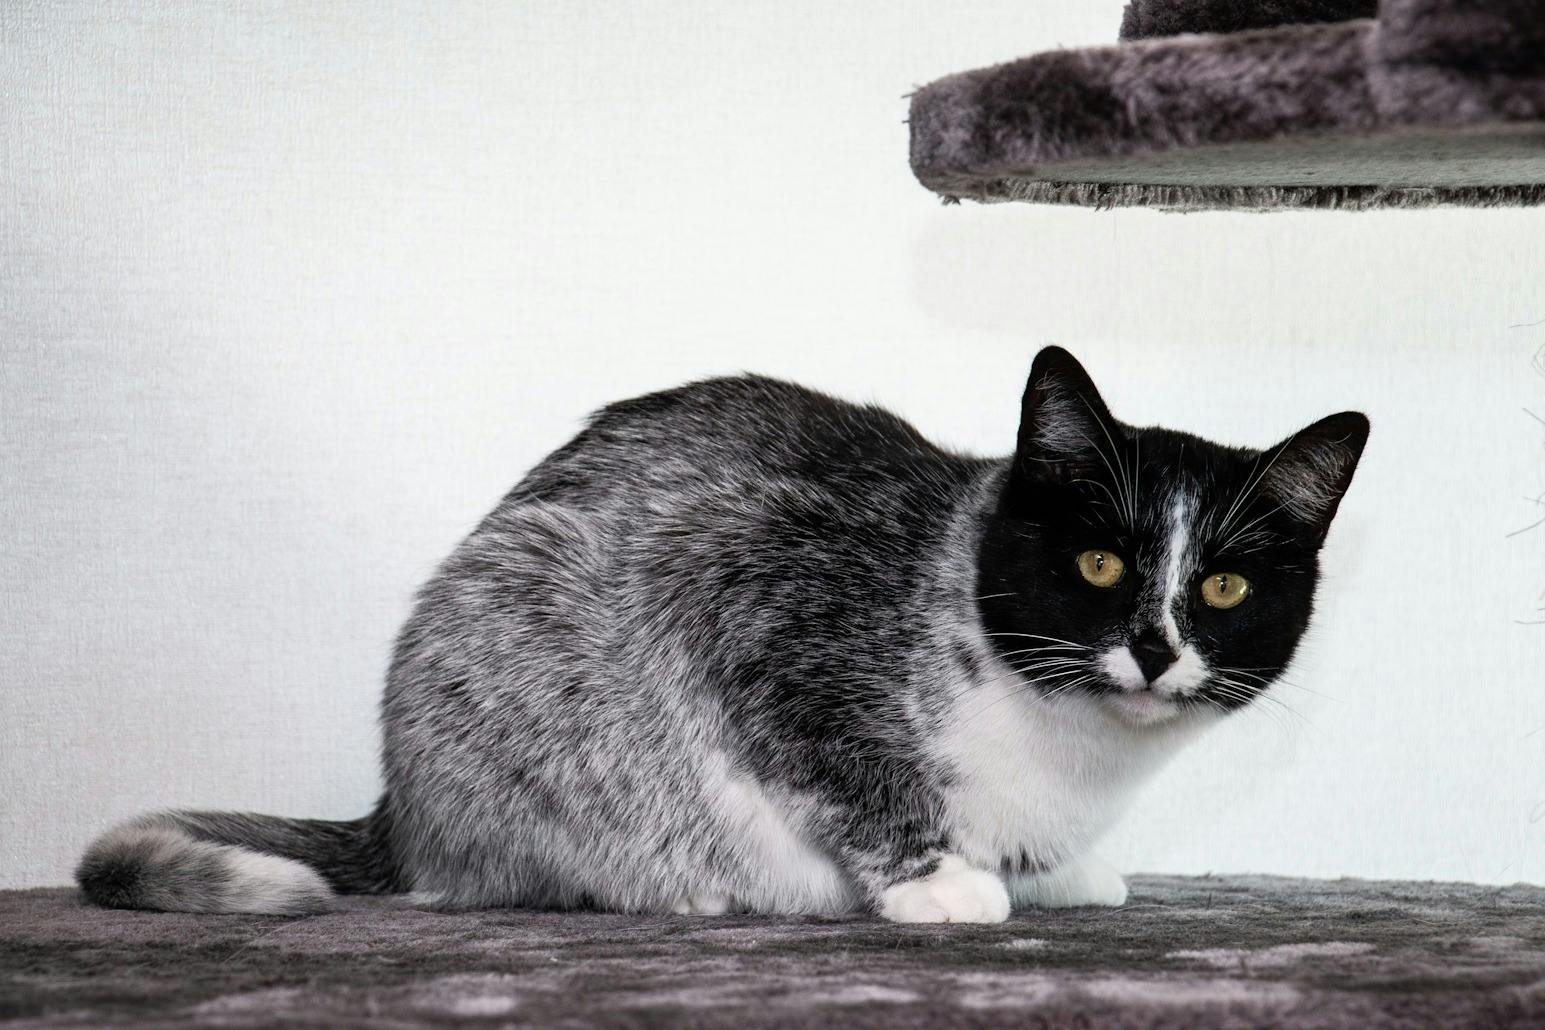 Cat with the salmiak, or "salty licorice," coat color variant. Image credit: Ari Kankainen